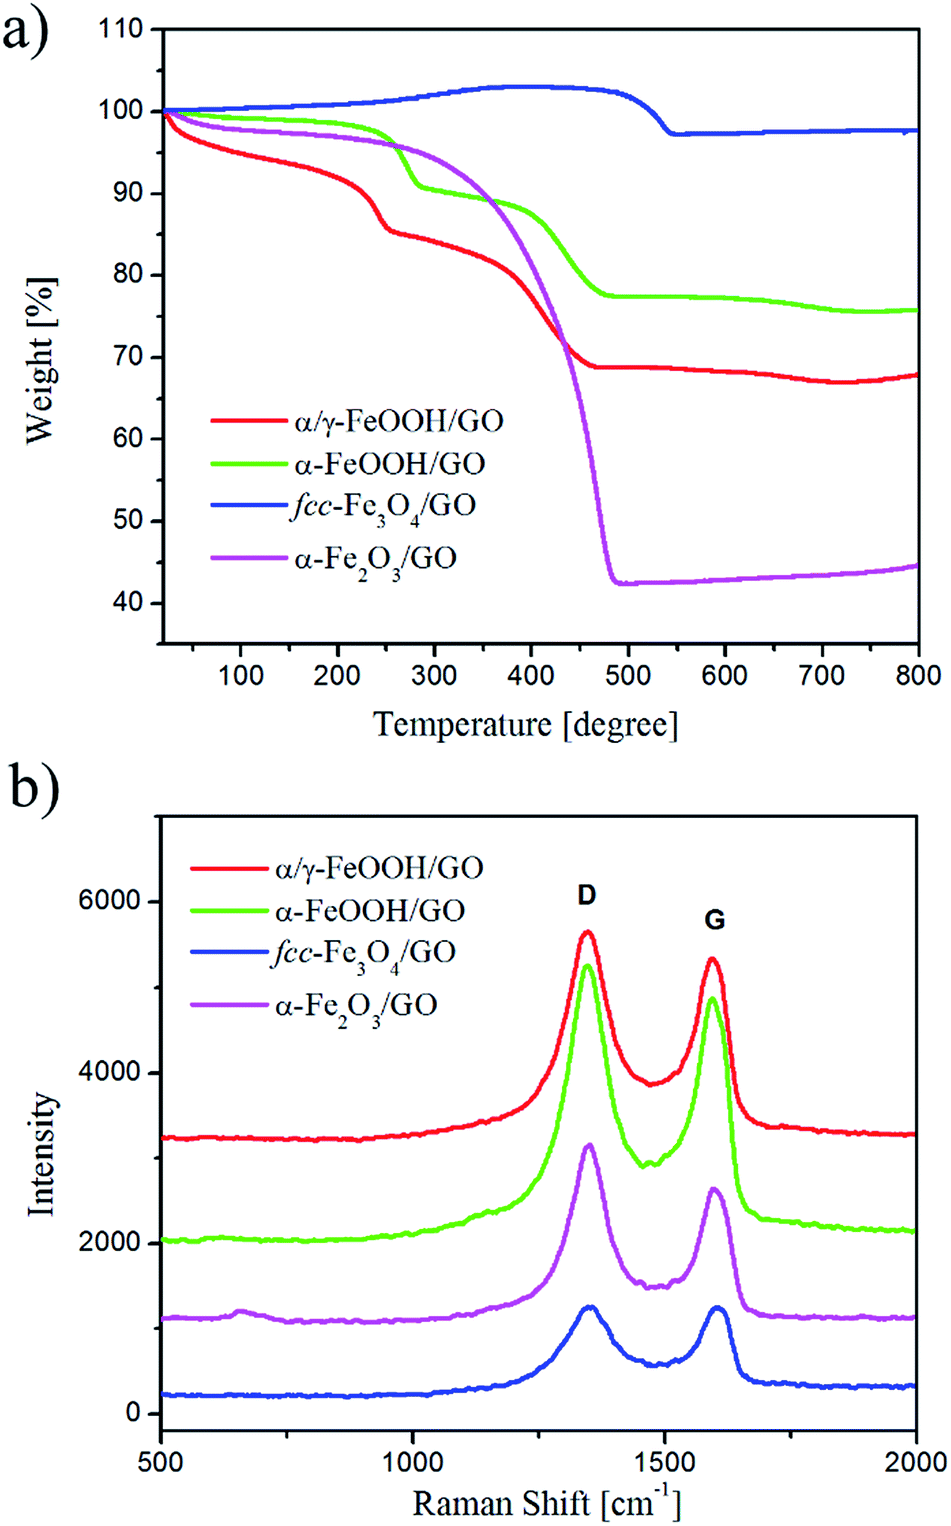 Iron III Oxide Powder (Ferric Oxide, Fe2O3, 99.5%, 40-50µm)